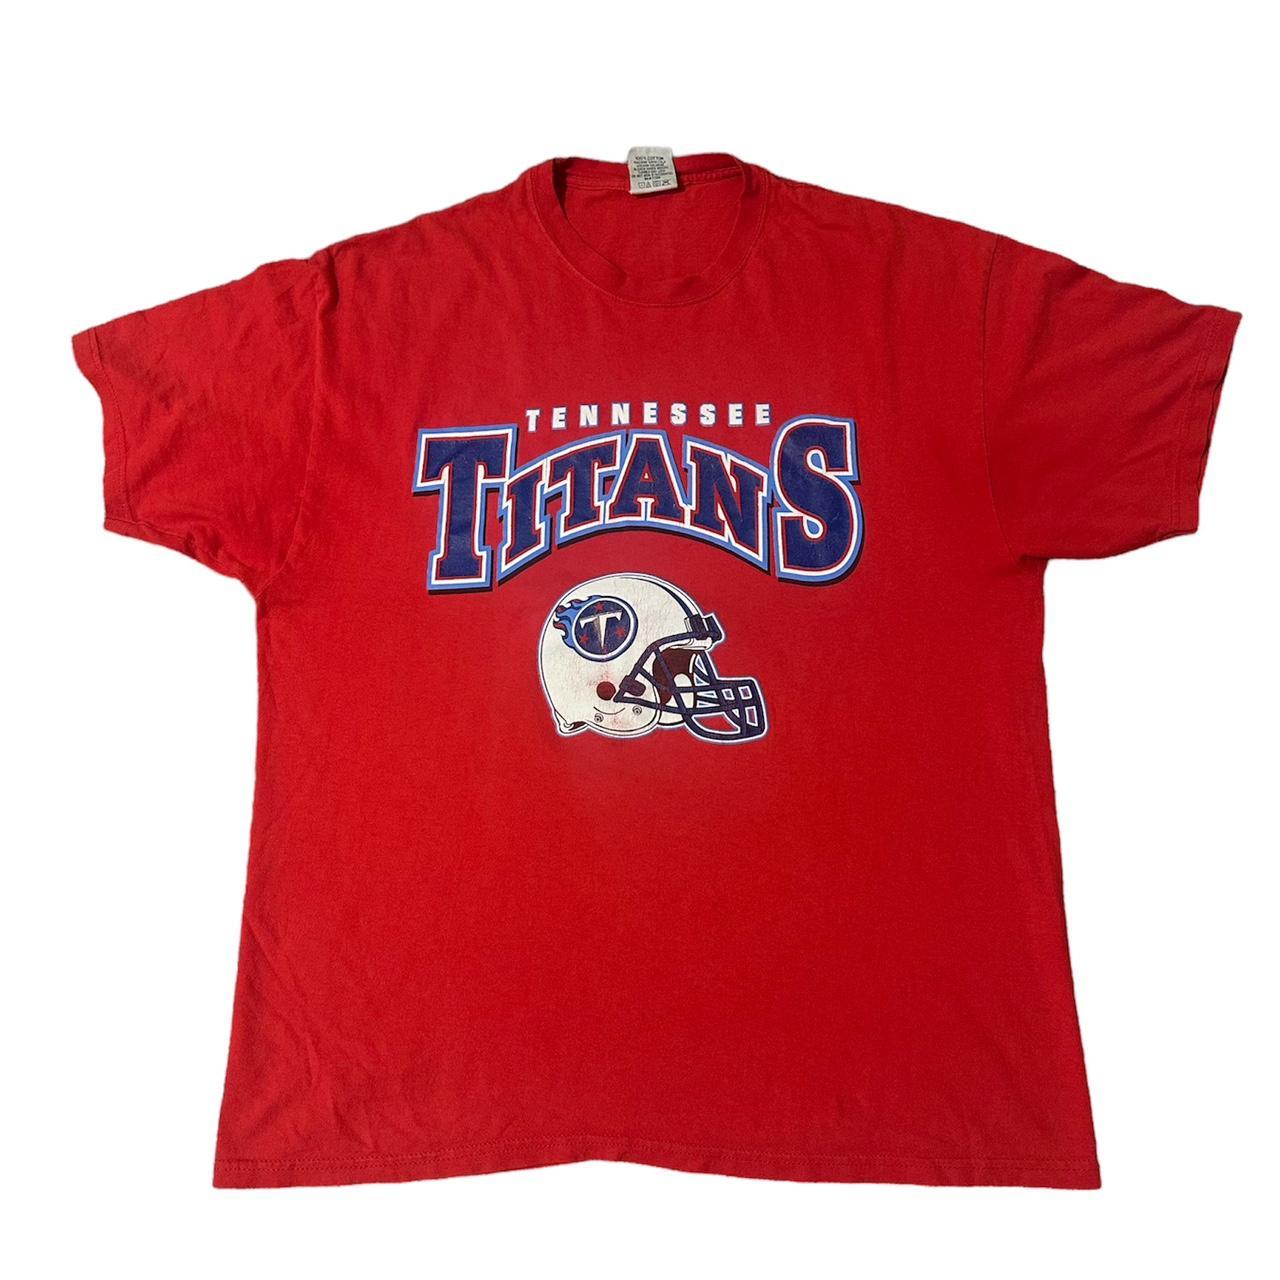 Men's Tennessee Titans Graphic Tee, Men's Tops